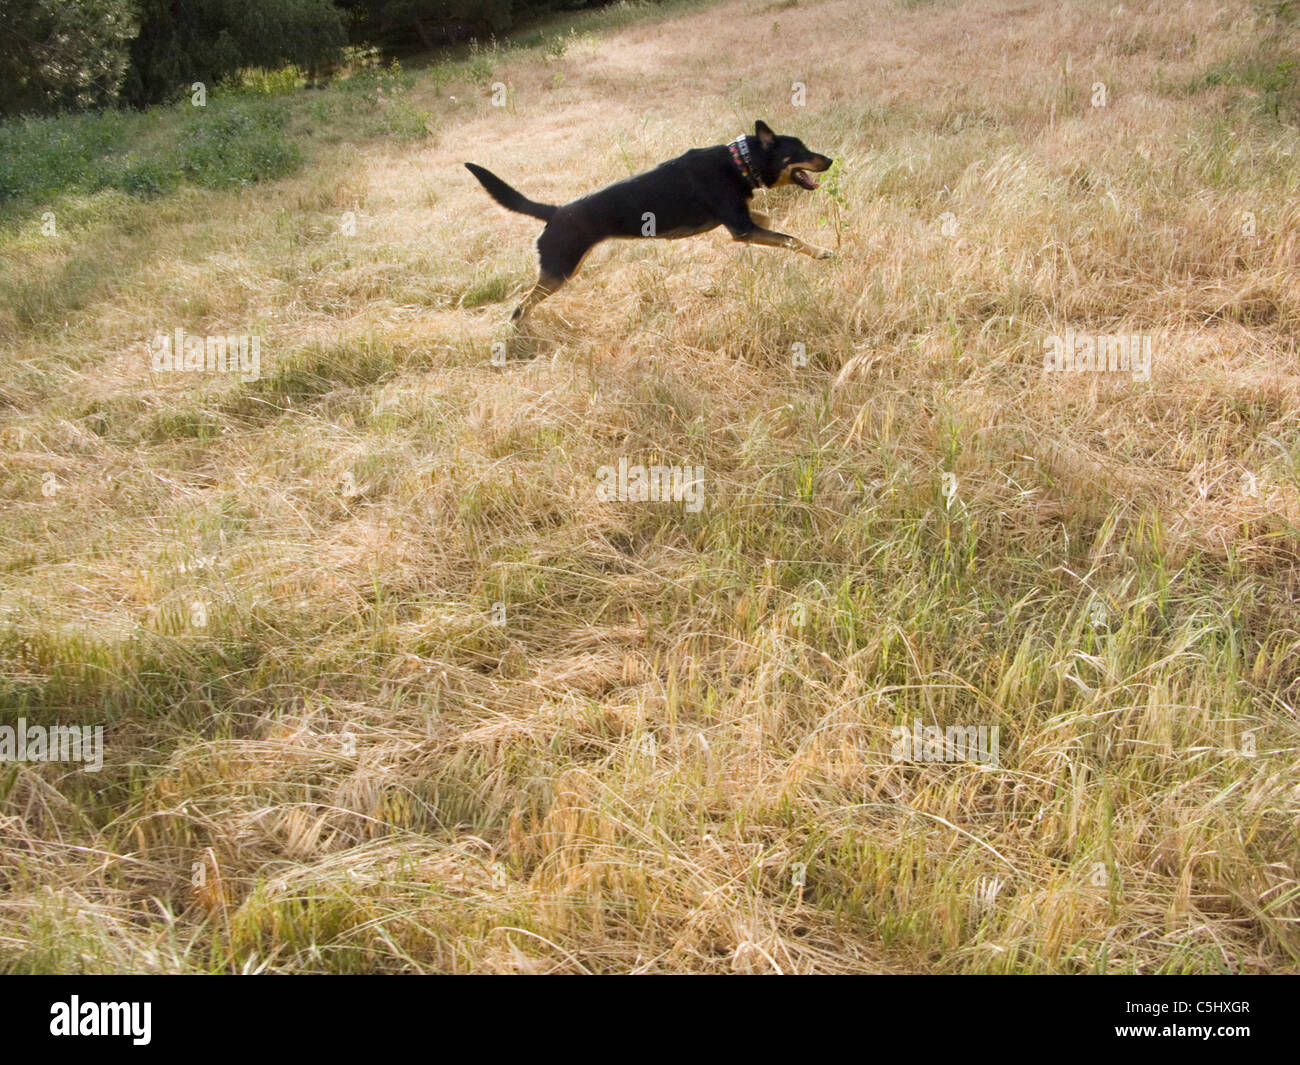 Northridge, California - 11/24/04 - Dog runs in wild grass .  Â¬Â©David H Wells / The Image Works Stock Photo